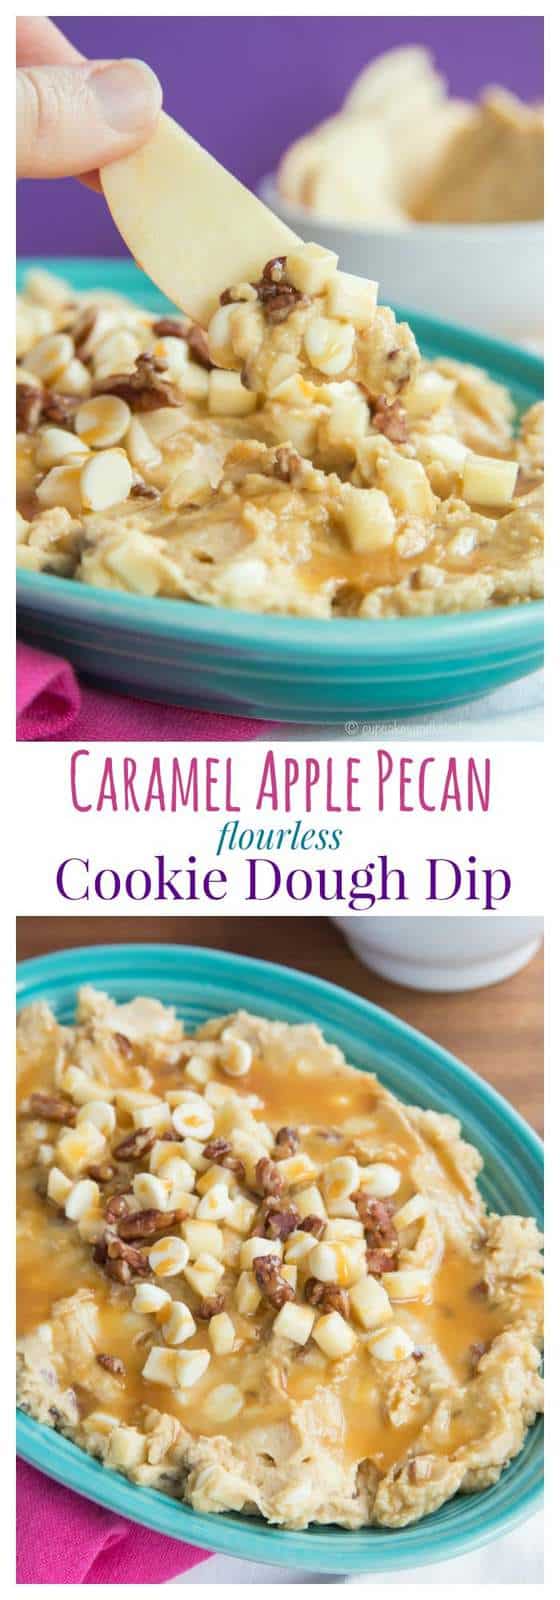 Caramel Apple Pecan Flourless Cookie Dough Dip - a decadent dessert dip with a secret healthy ingredient to balance all that sweet goodness. | cupcakesandkalechips.com | gluten free recipe